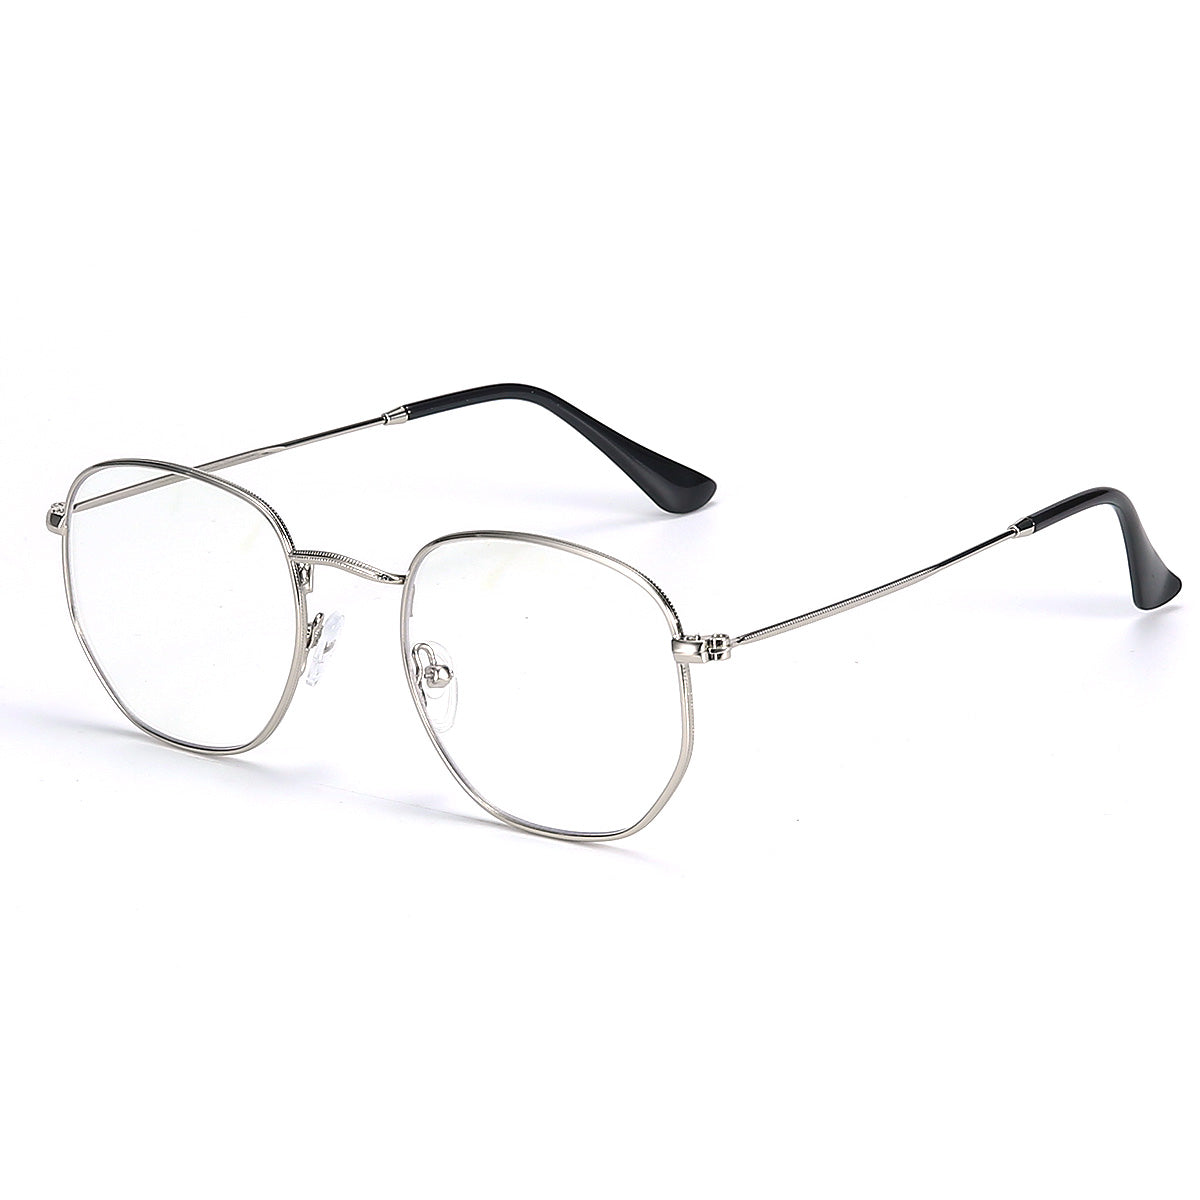 Sunglasses,specsmart, spec smart, glasses, eye glasses glasses frames, where to get glasses in lagos, eye treatment, wellness health care group, ACCESS RILEY